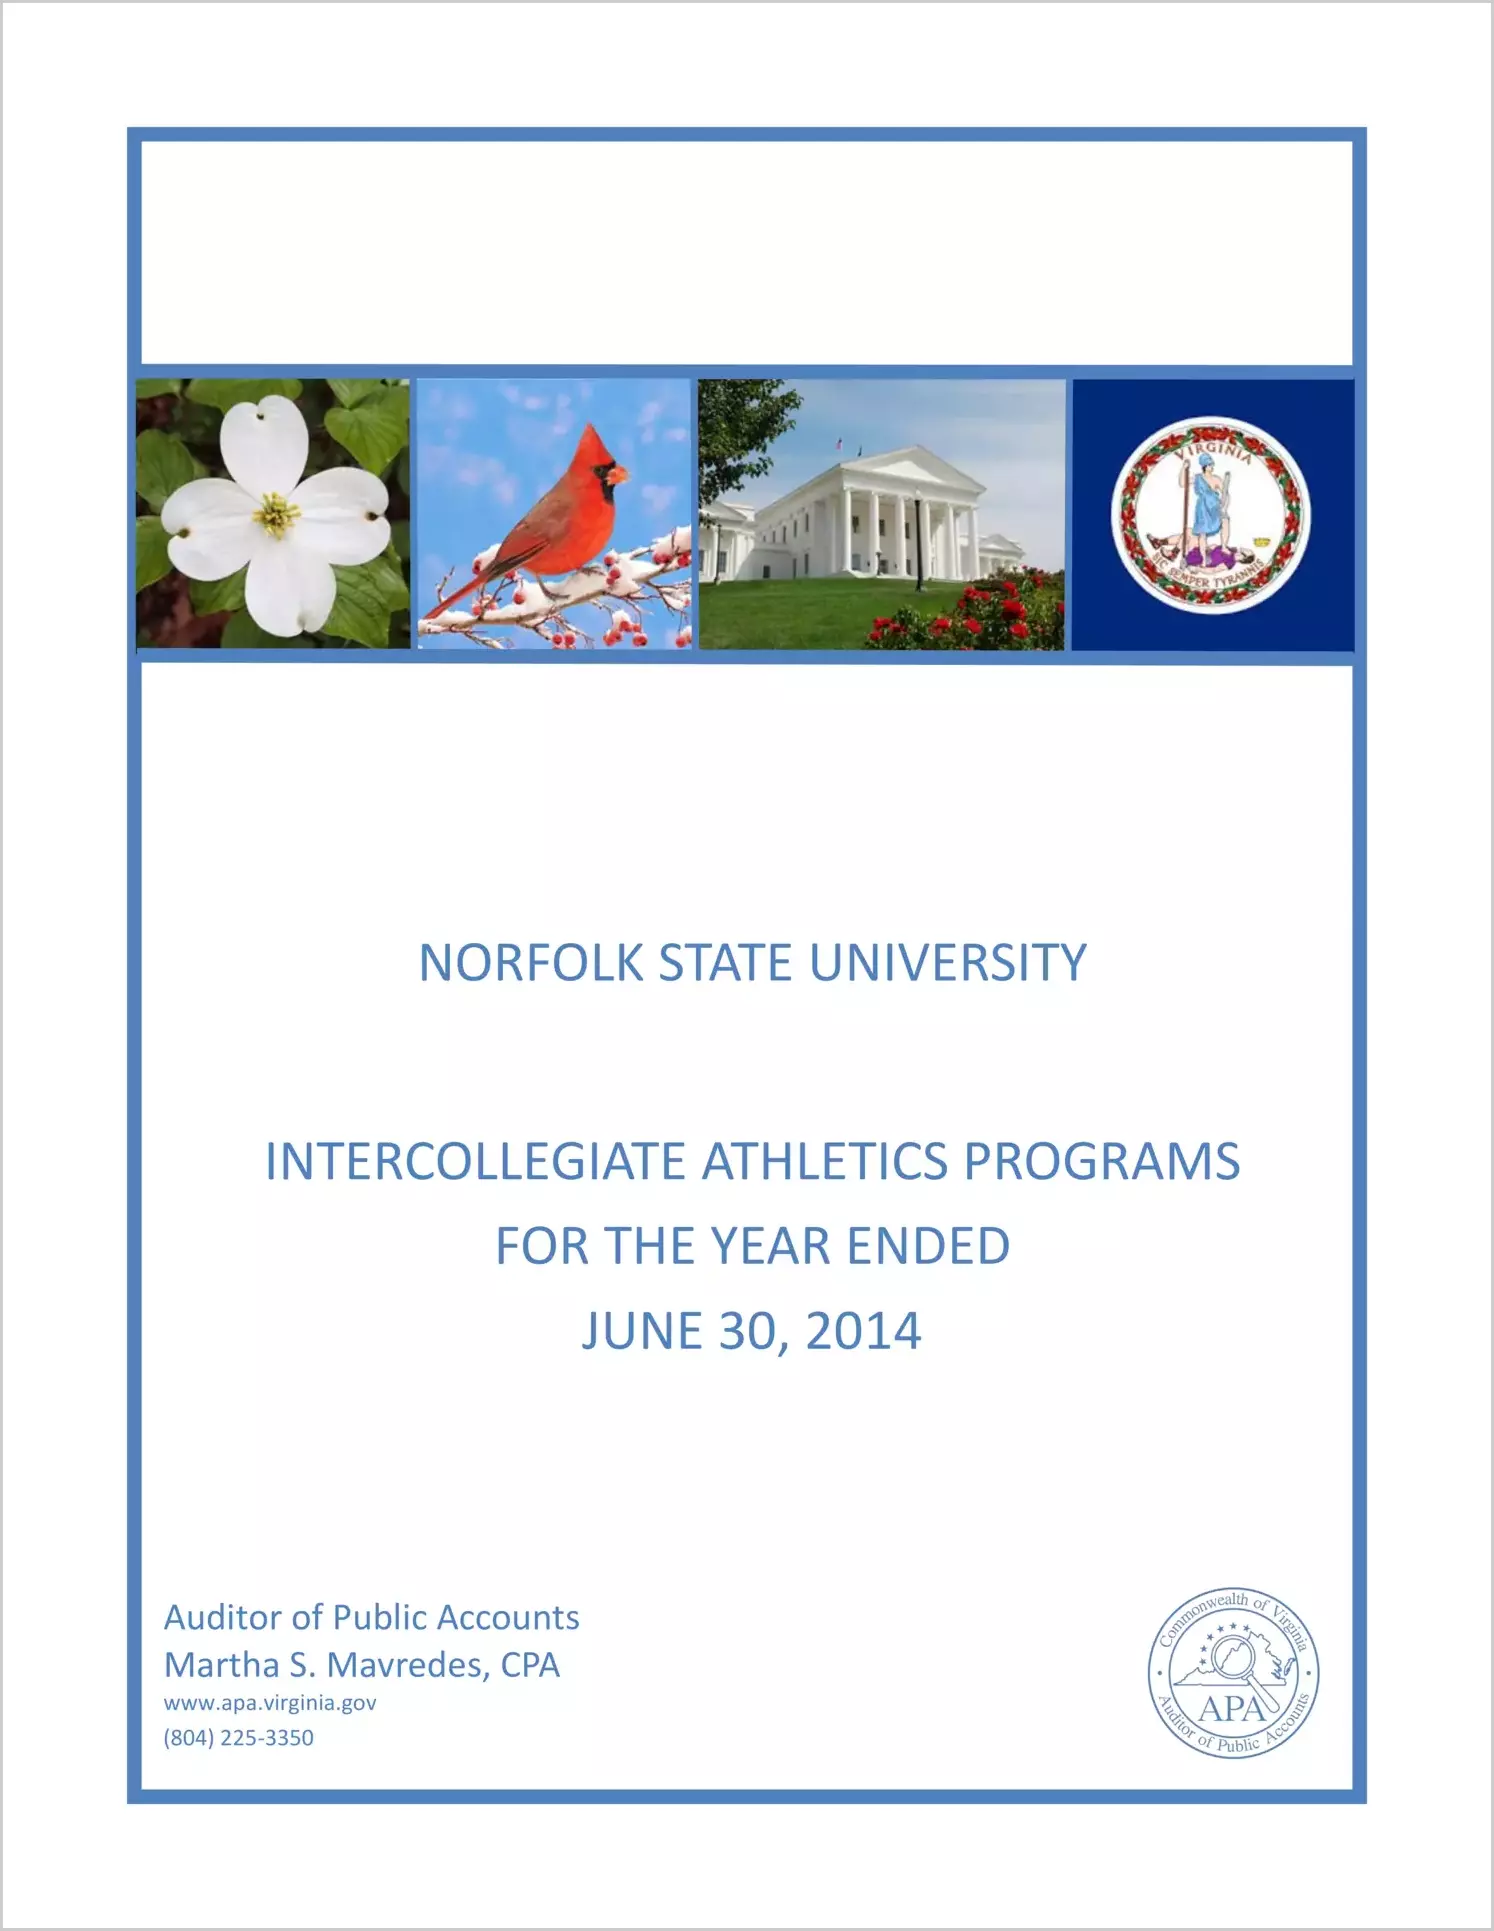 Norfolk State University Intercollegiate Athletics Programs for the year ended June 30, 2014